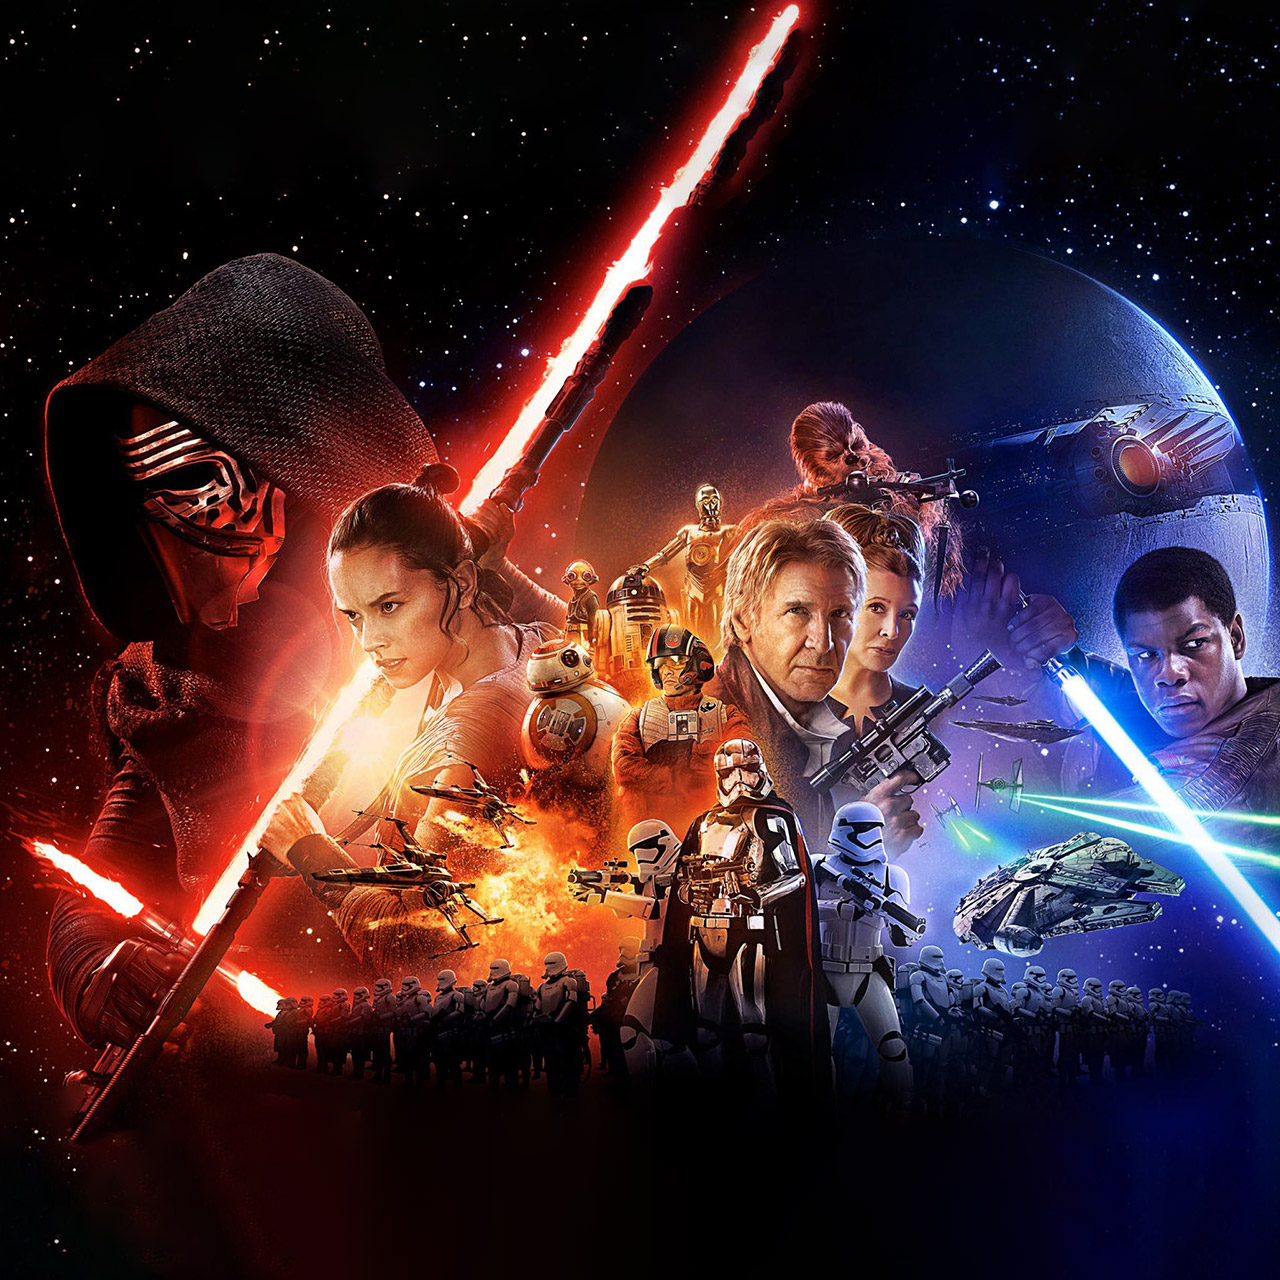 Star Wars The Force Awakens wallpaper 1280x1280